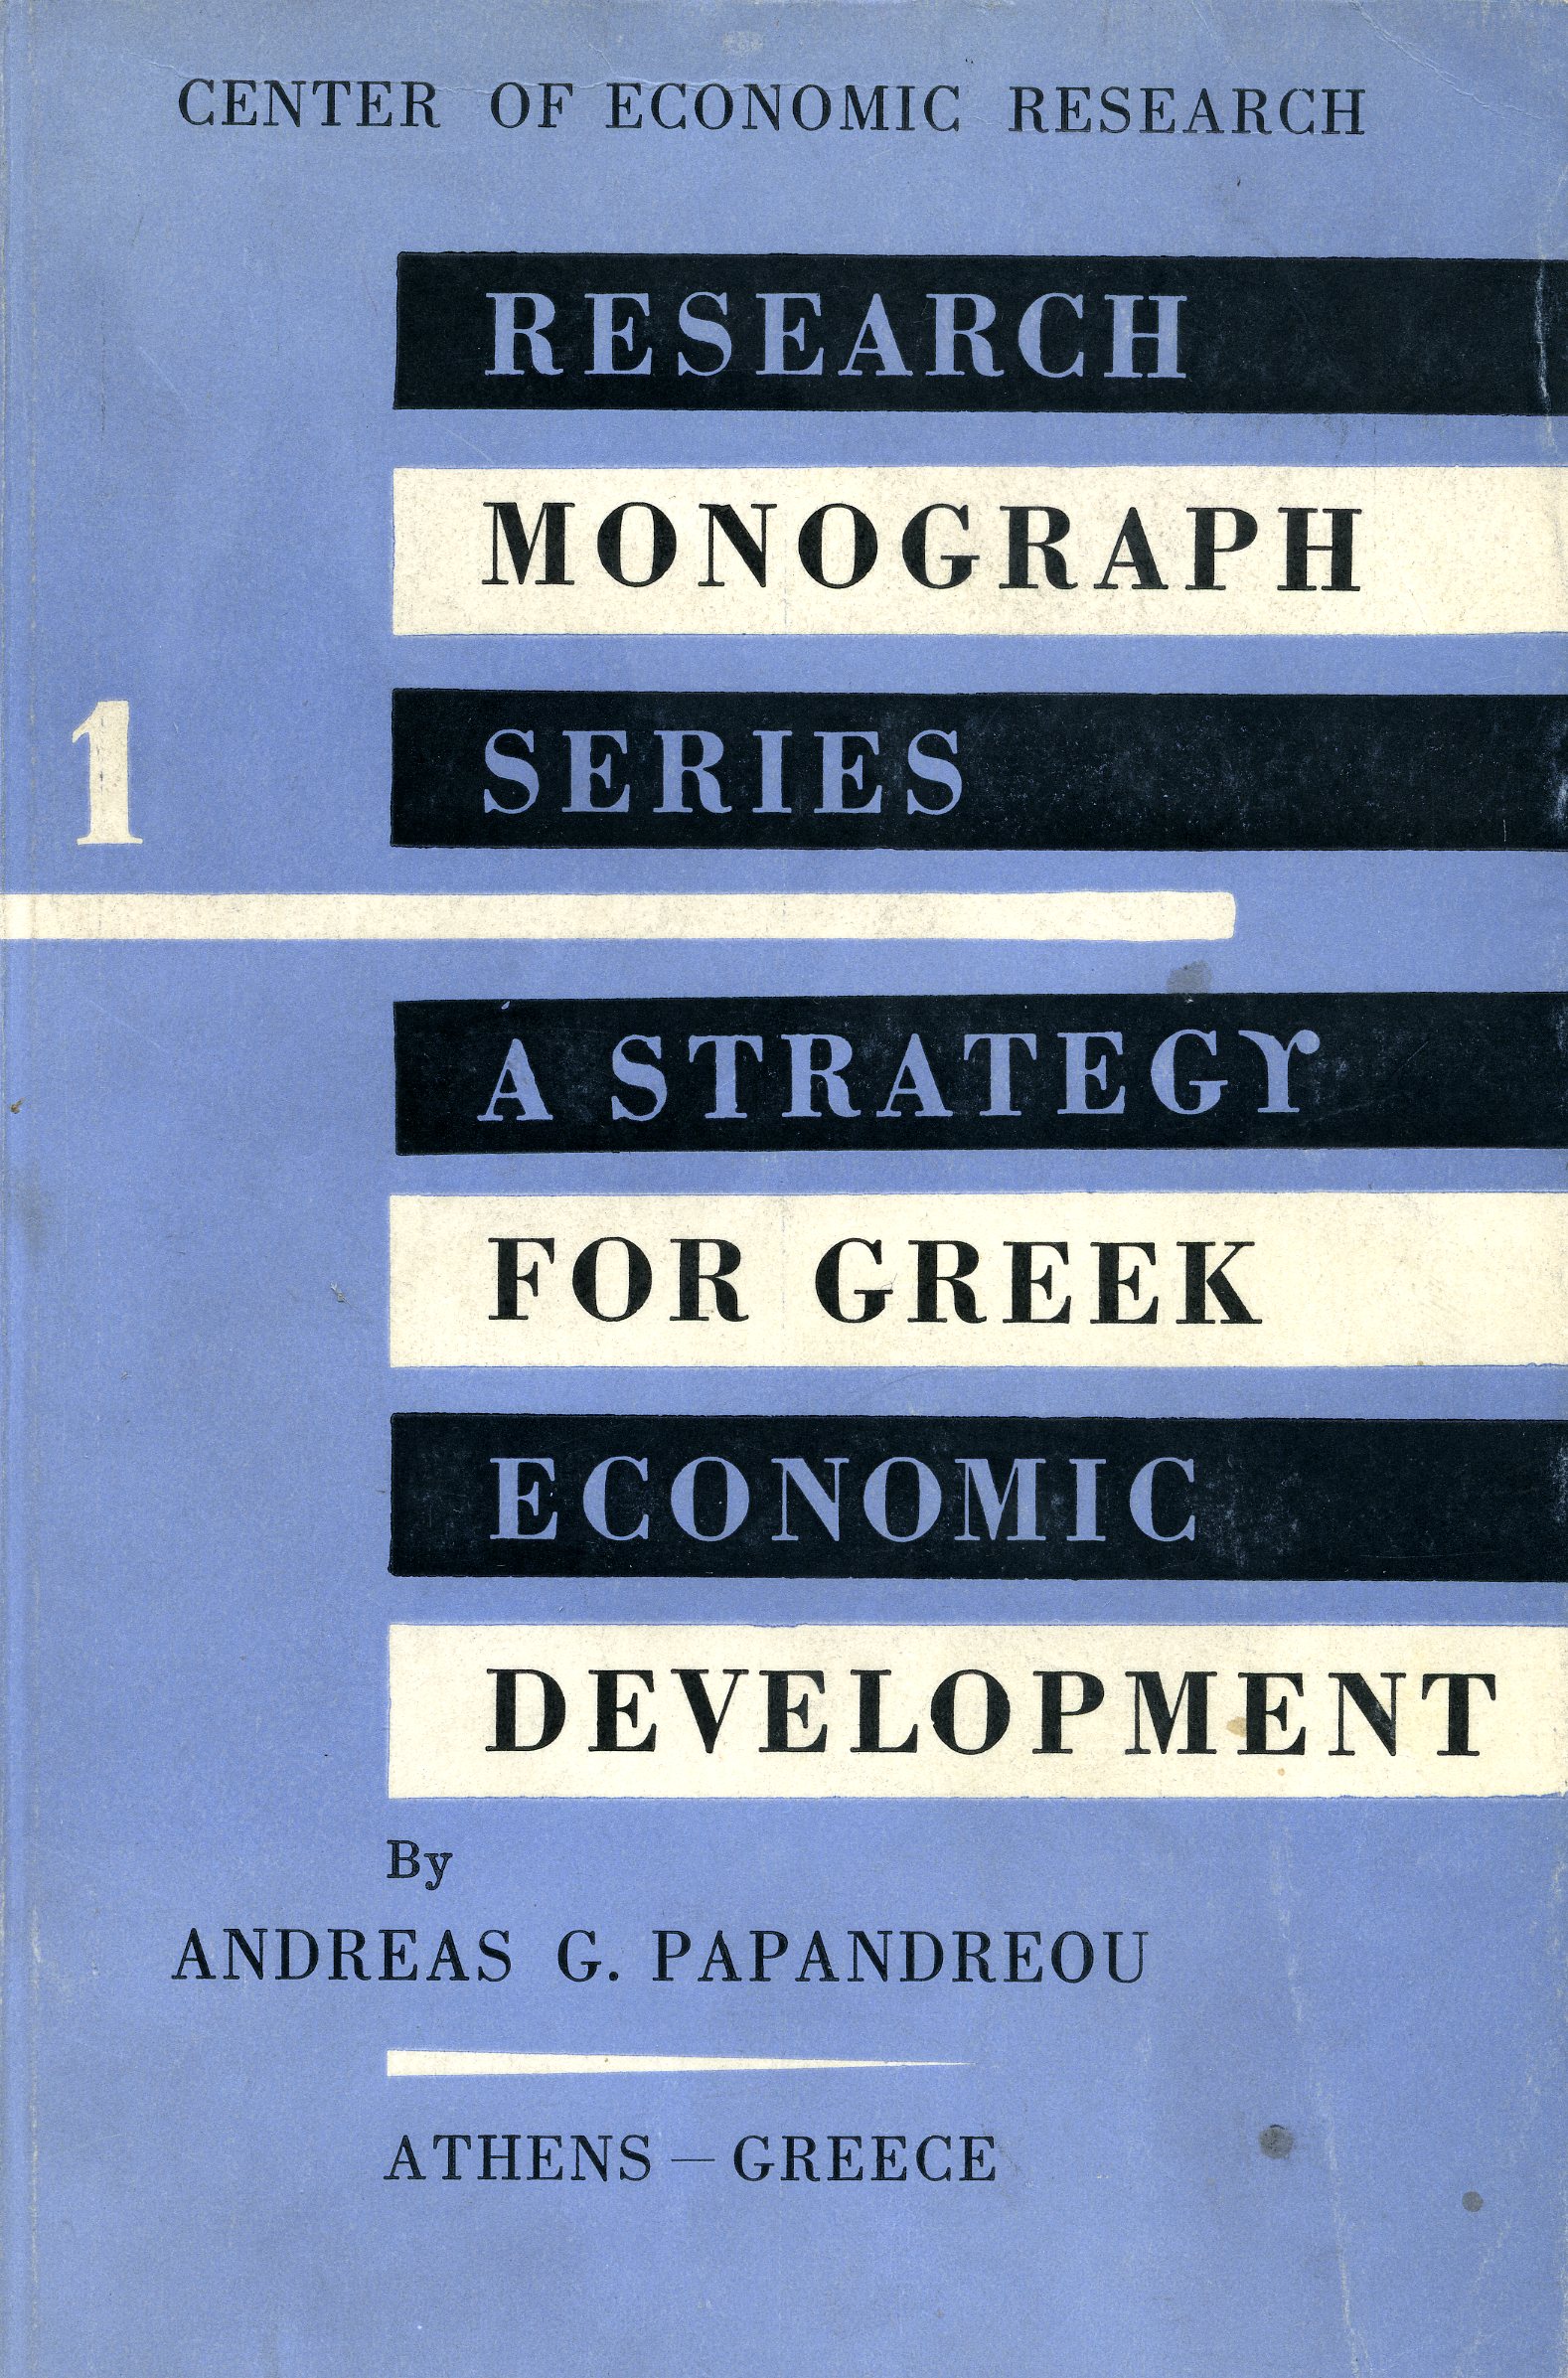 A strategy for Greek economic development exof